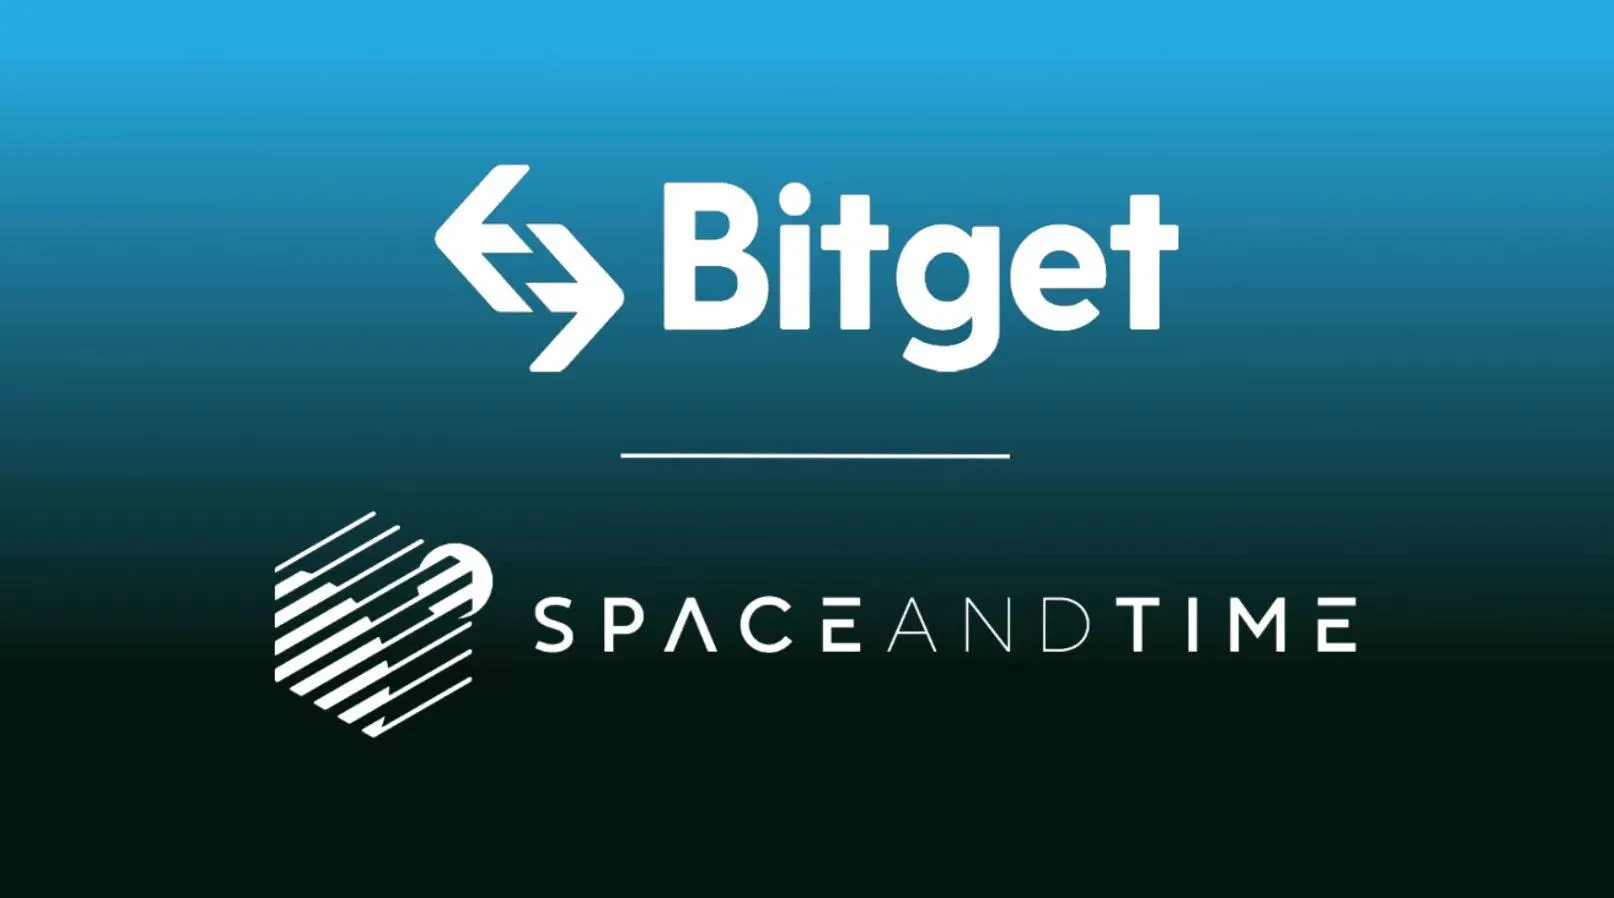 Bitget 与 Space and Time 建立战略合作关系，财务透明度再升级